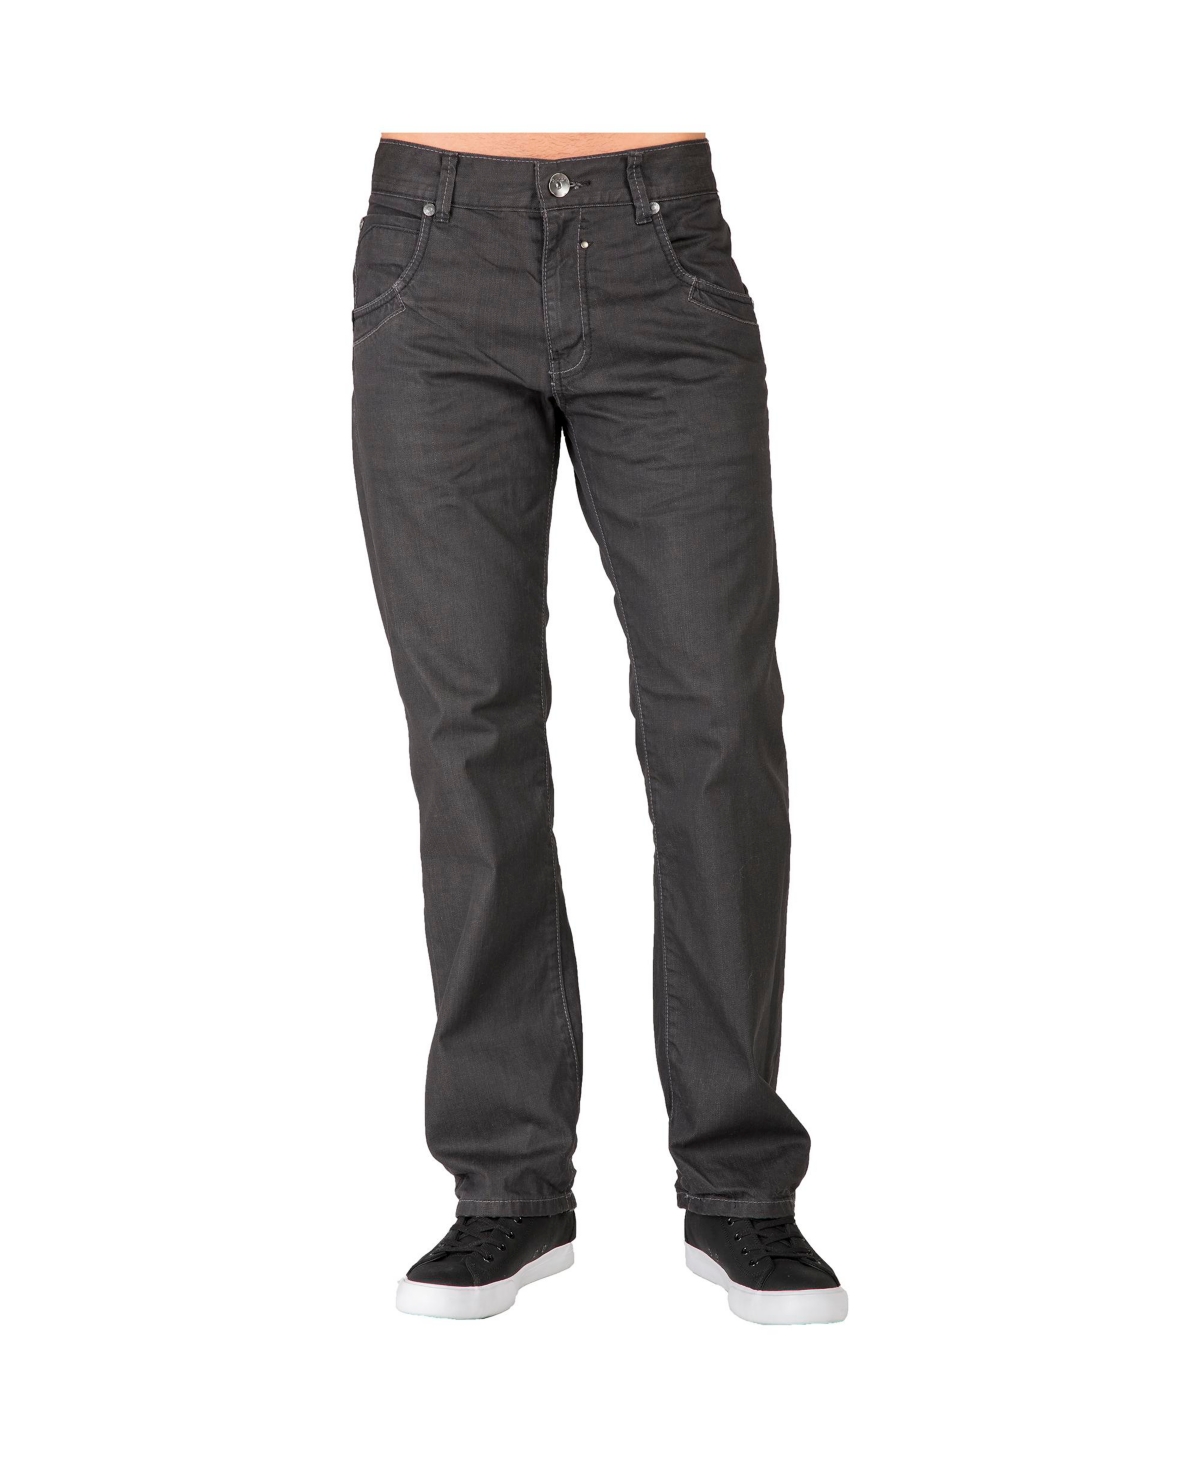 Men's Relaxed Straight Leg coated Black Premium Denim Jeans Zipper Pocket - Espresso